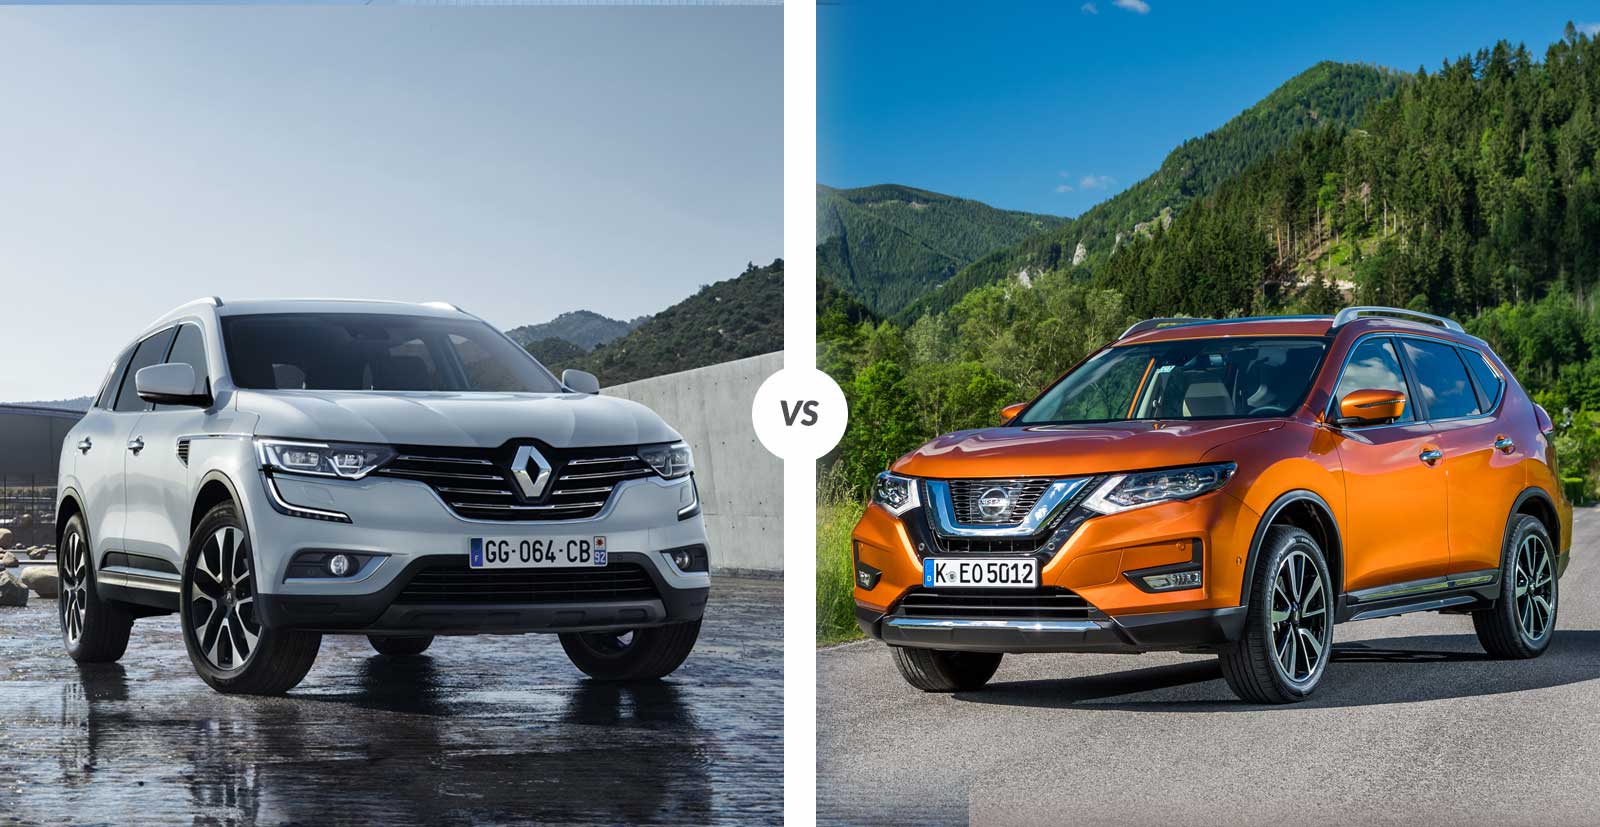 Comparativa: Nissan X-Trail 2018 vs Renault Koleos 2018